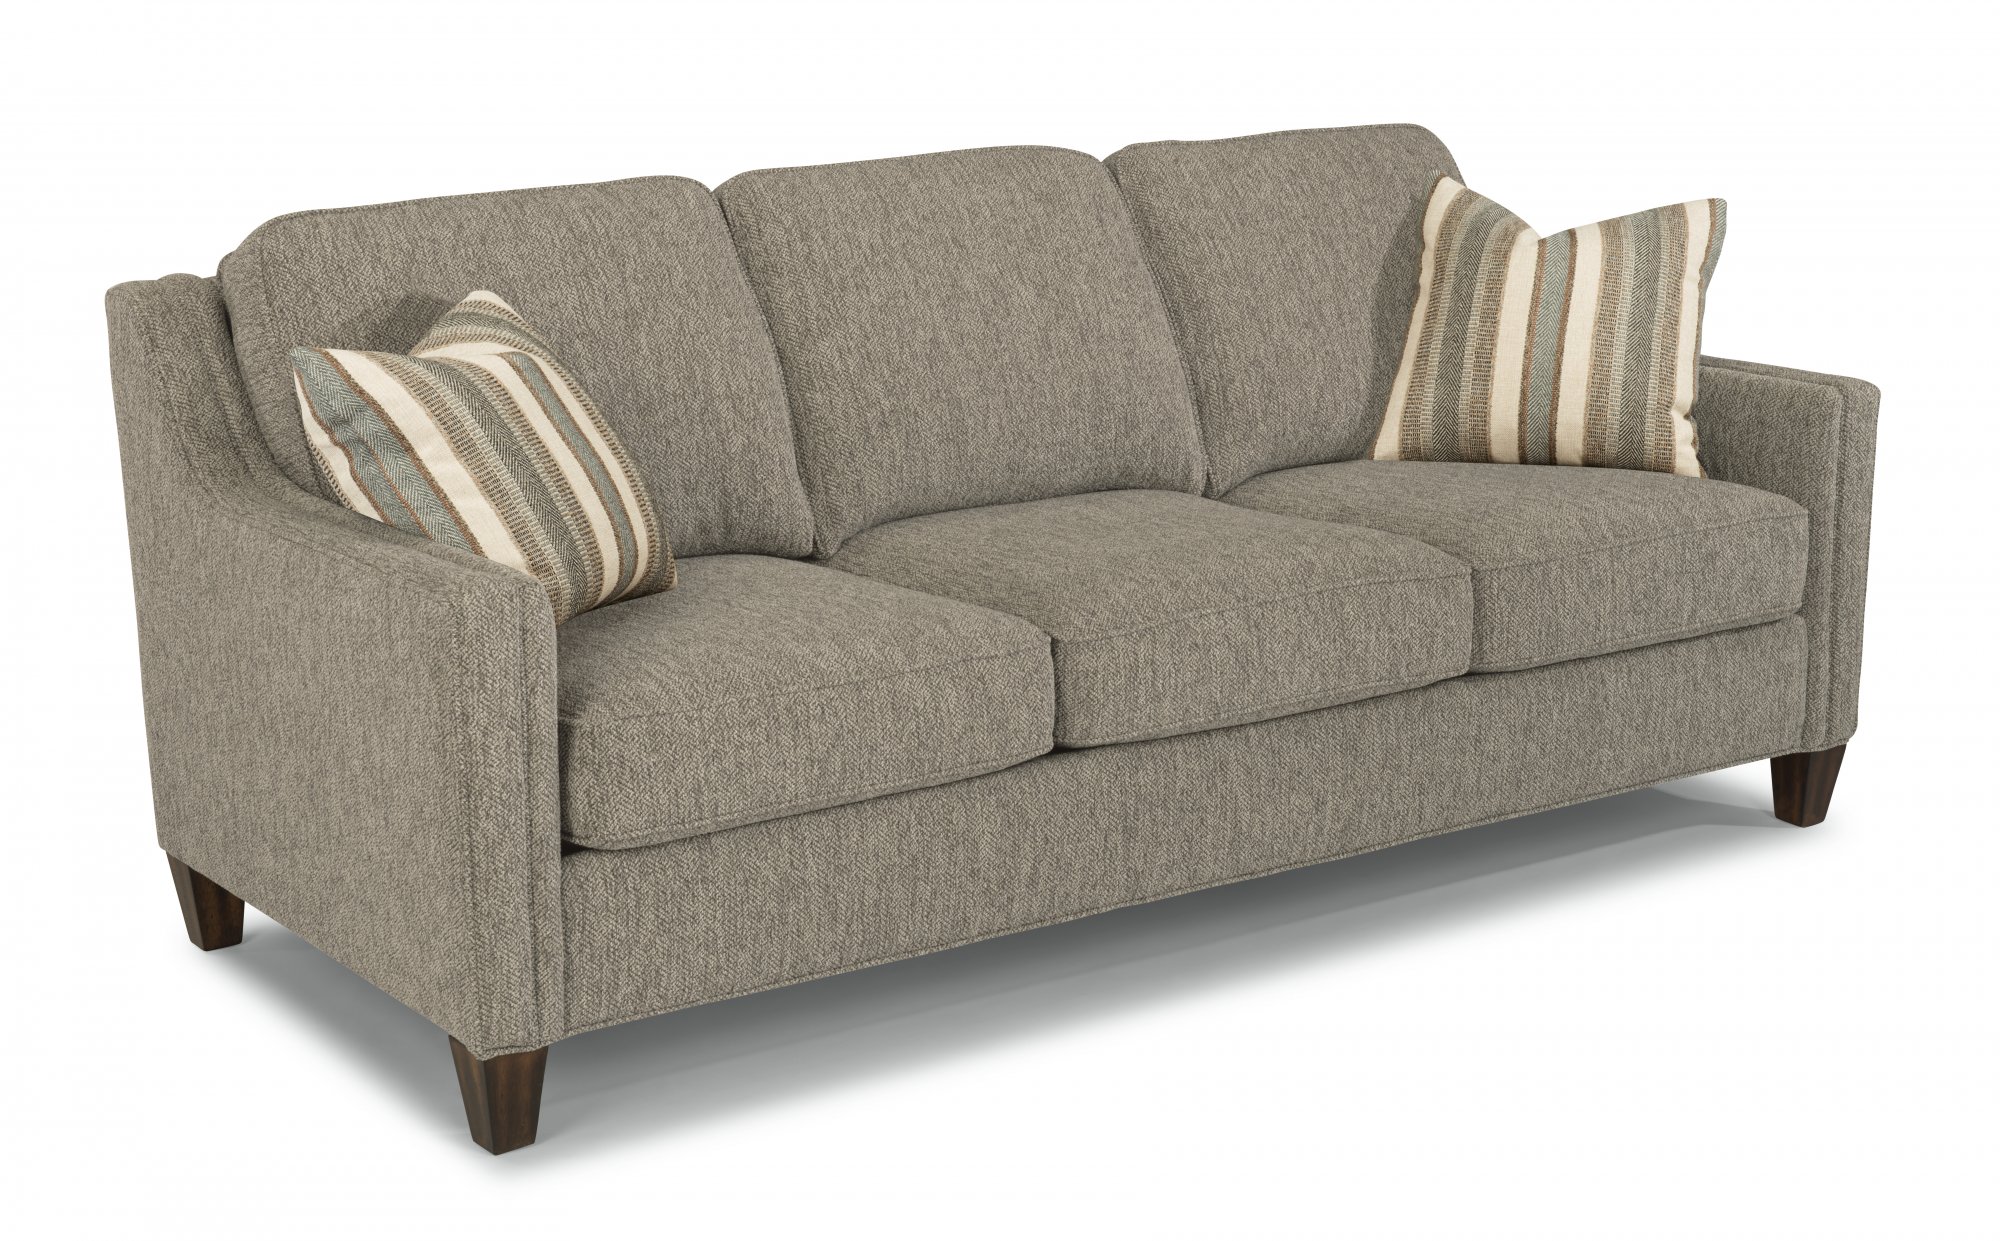 Finley Sofa by Flexsteel Lewis Furniture Store